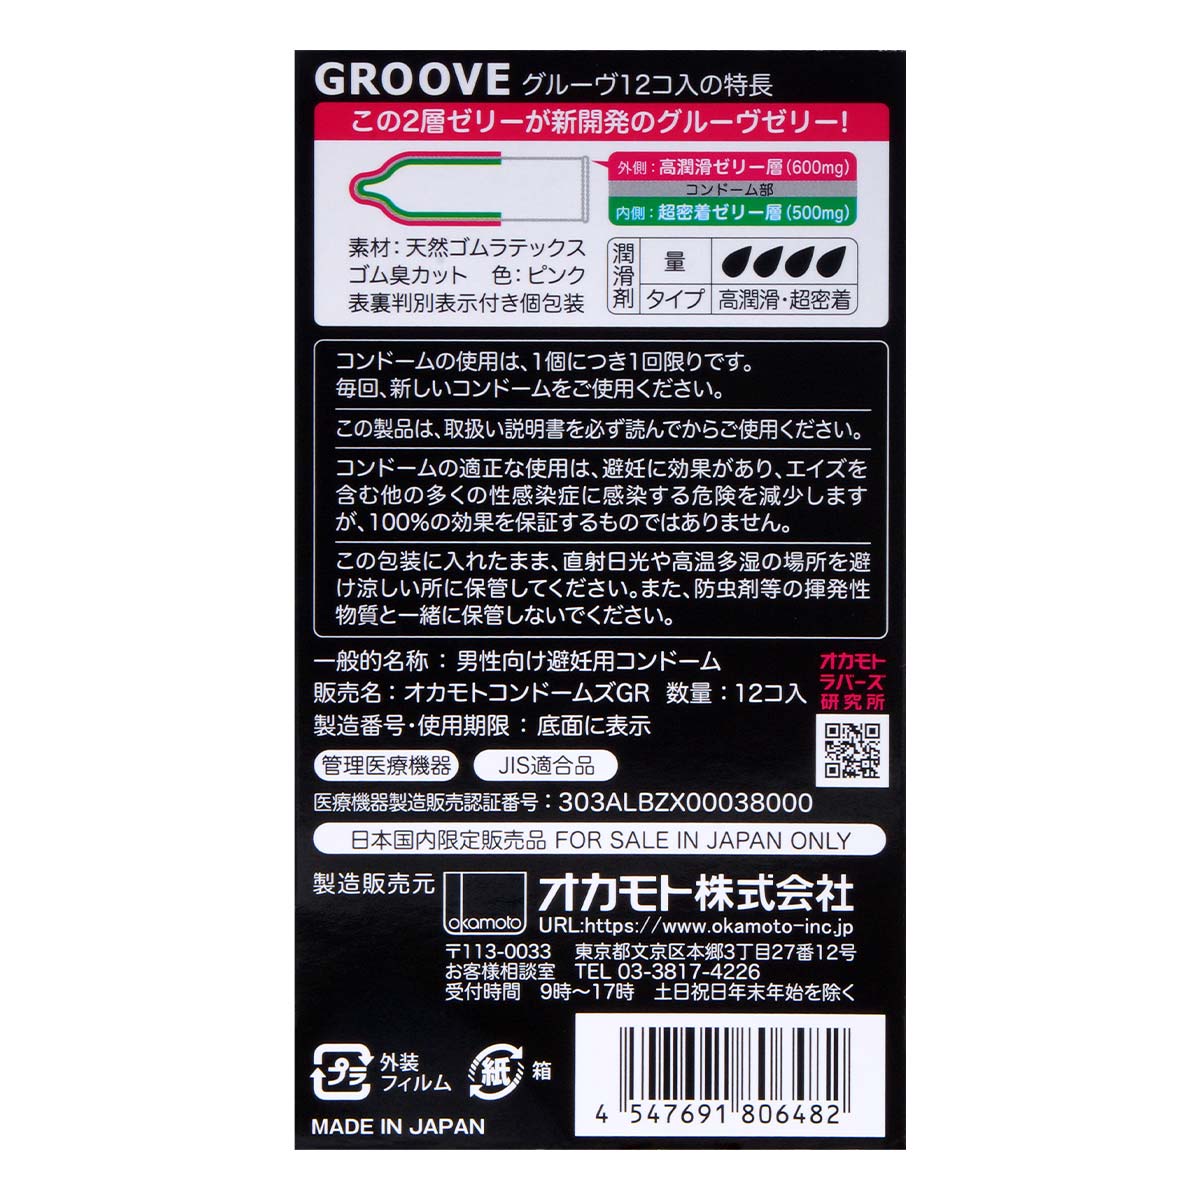 Okamoto GROOVE (Japan Edition) 12 pieces Latex Condom-p_3